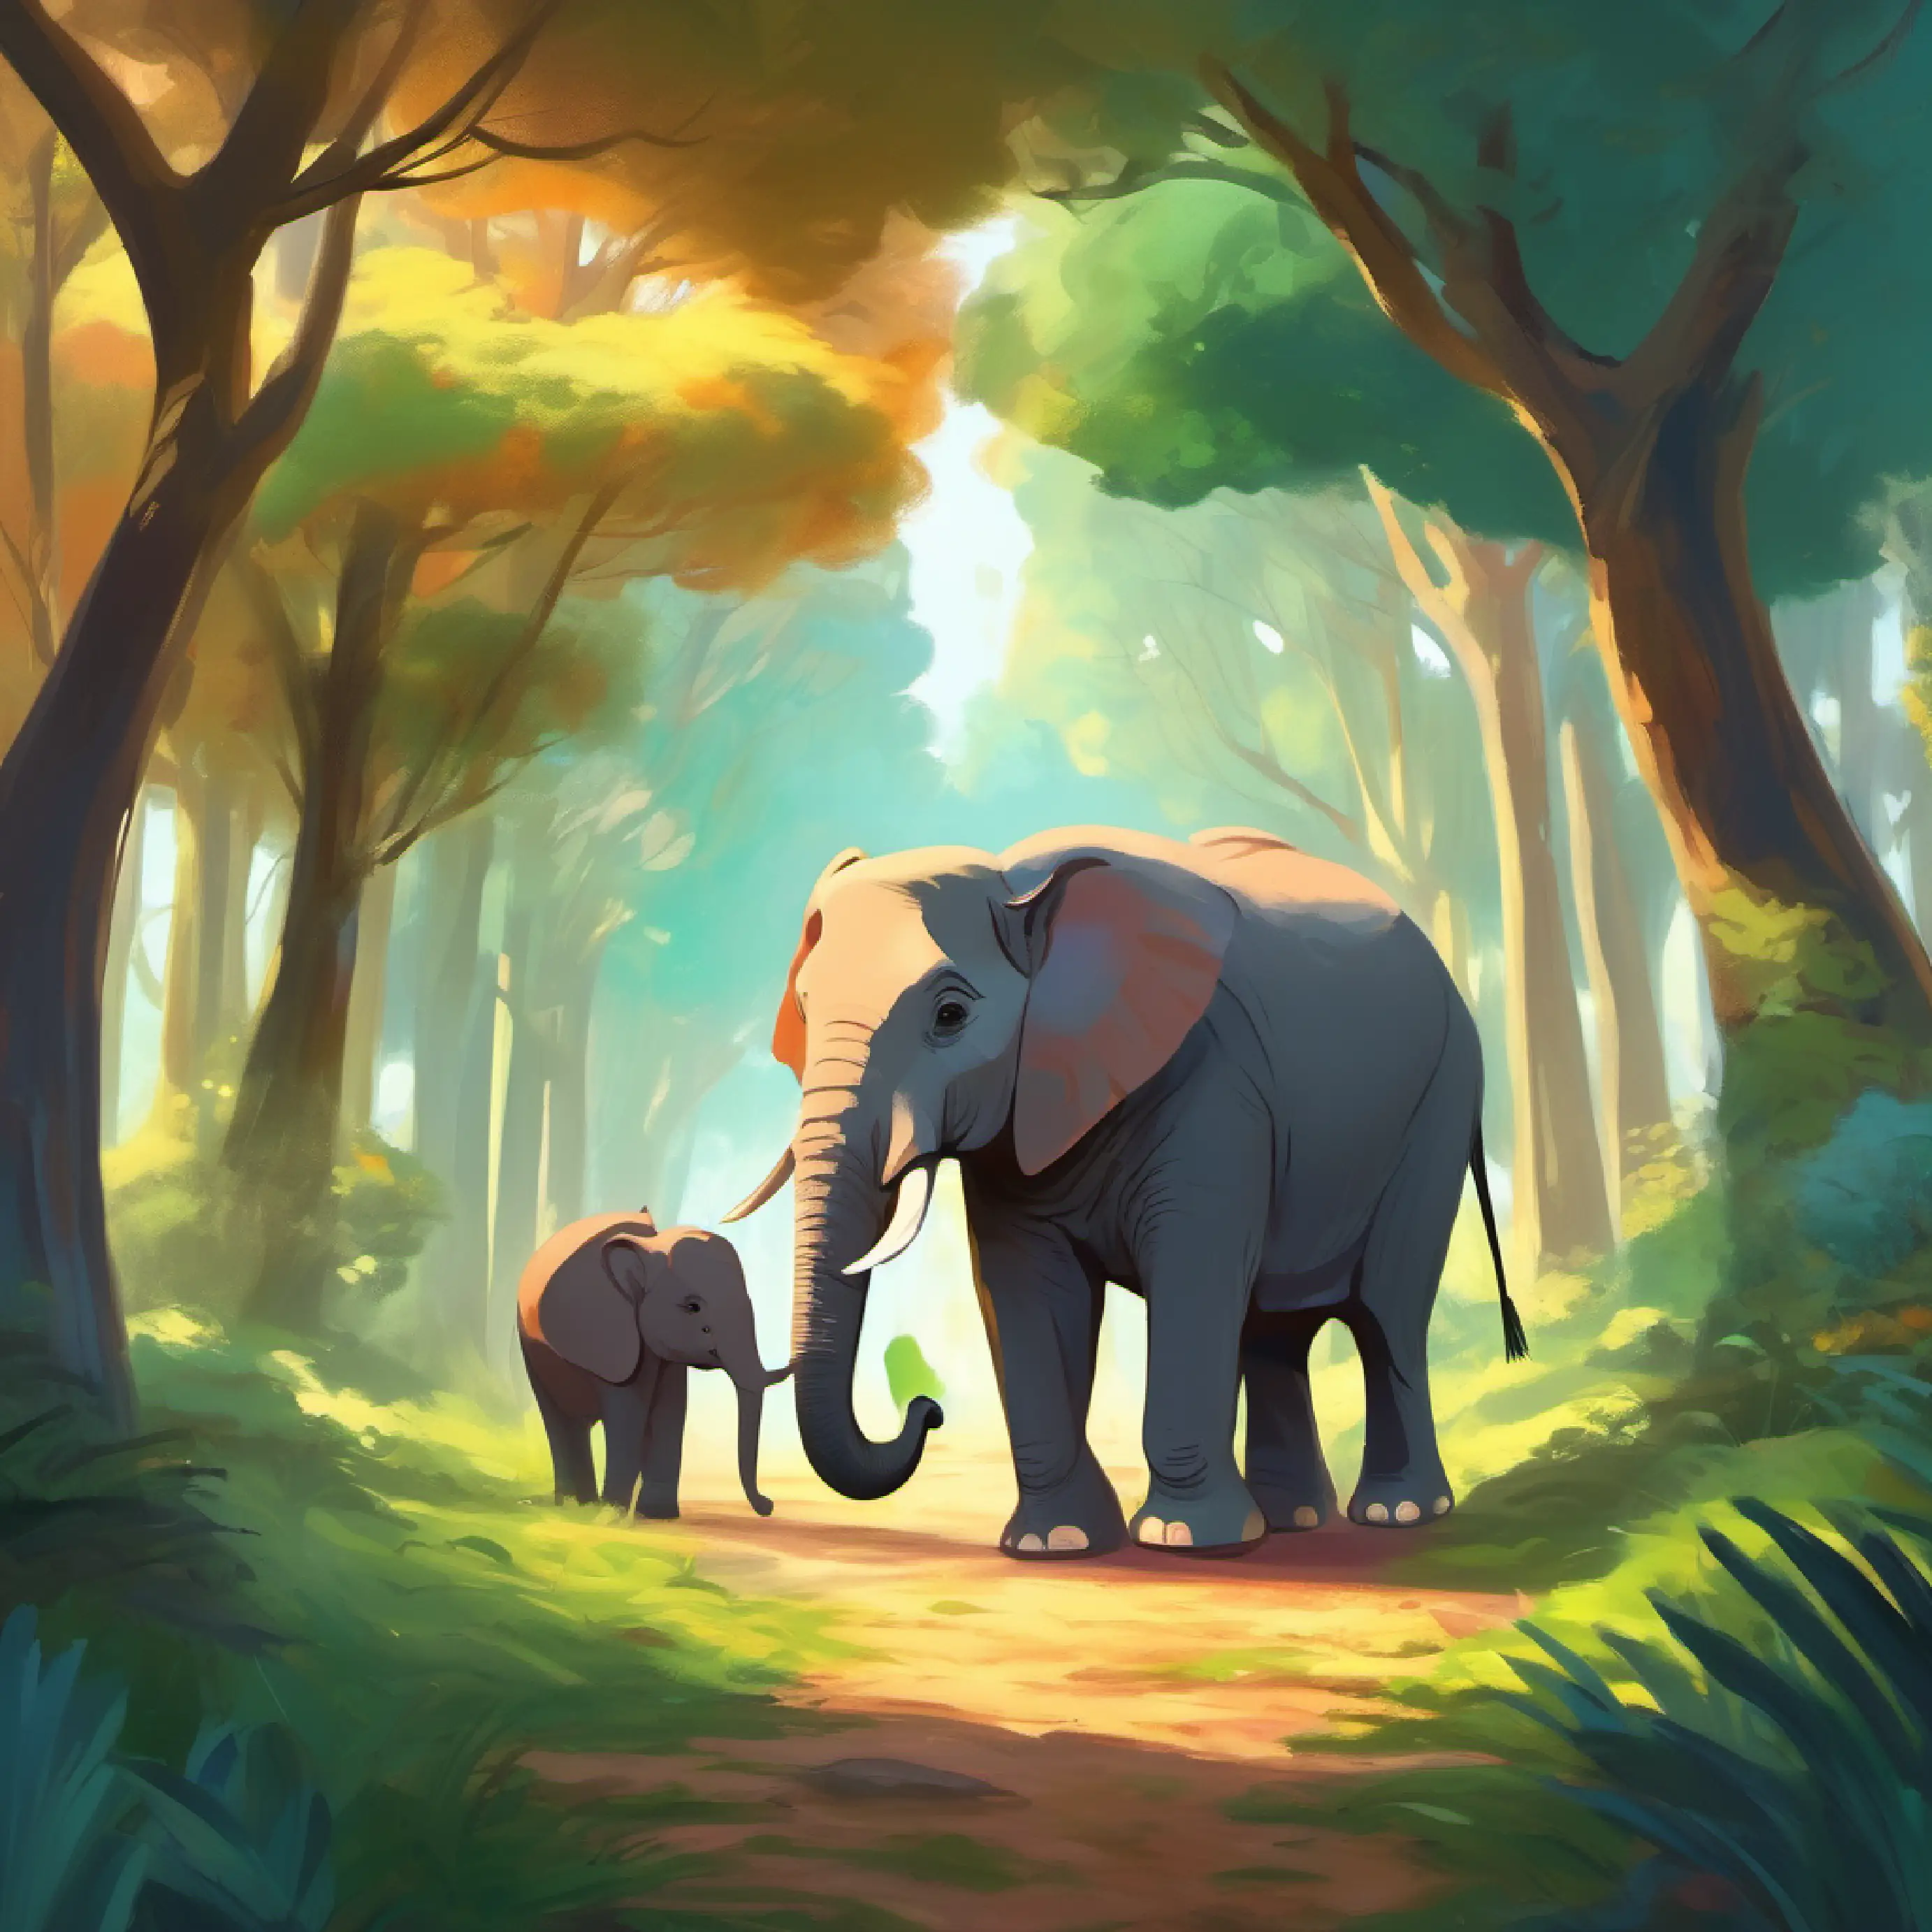 Meet elephant, forest setting, joyful reunion.